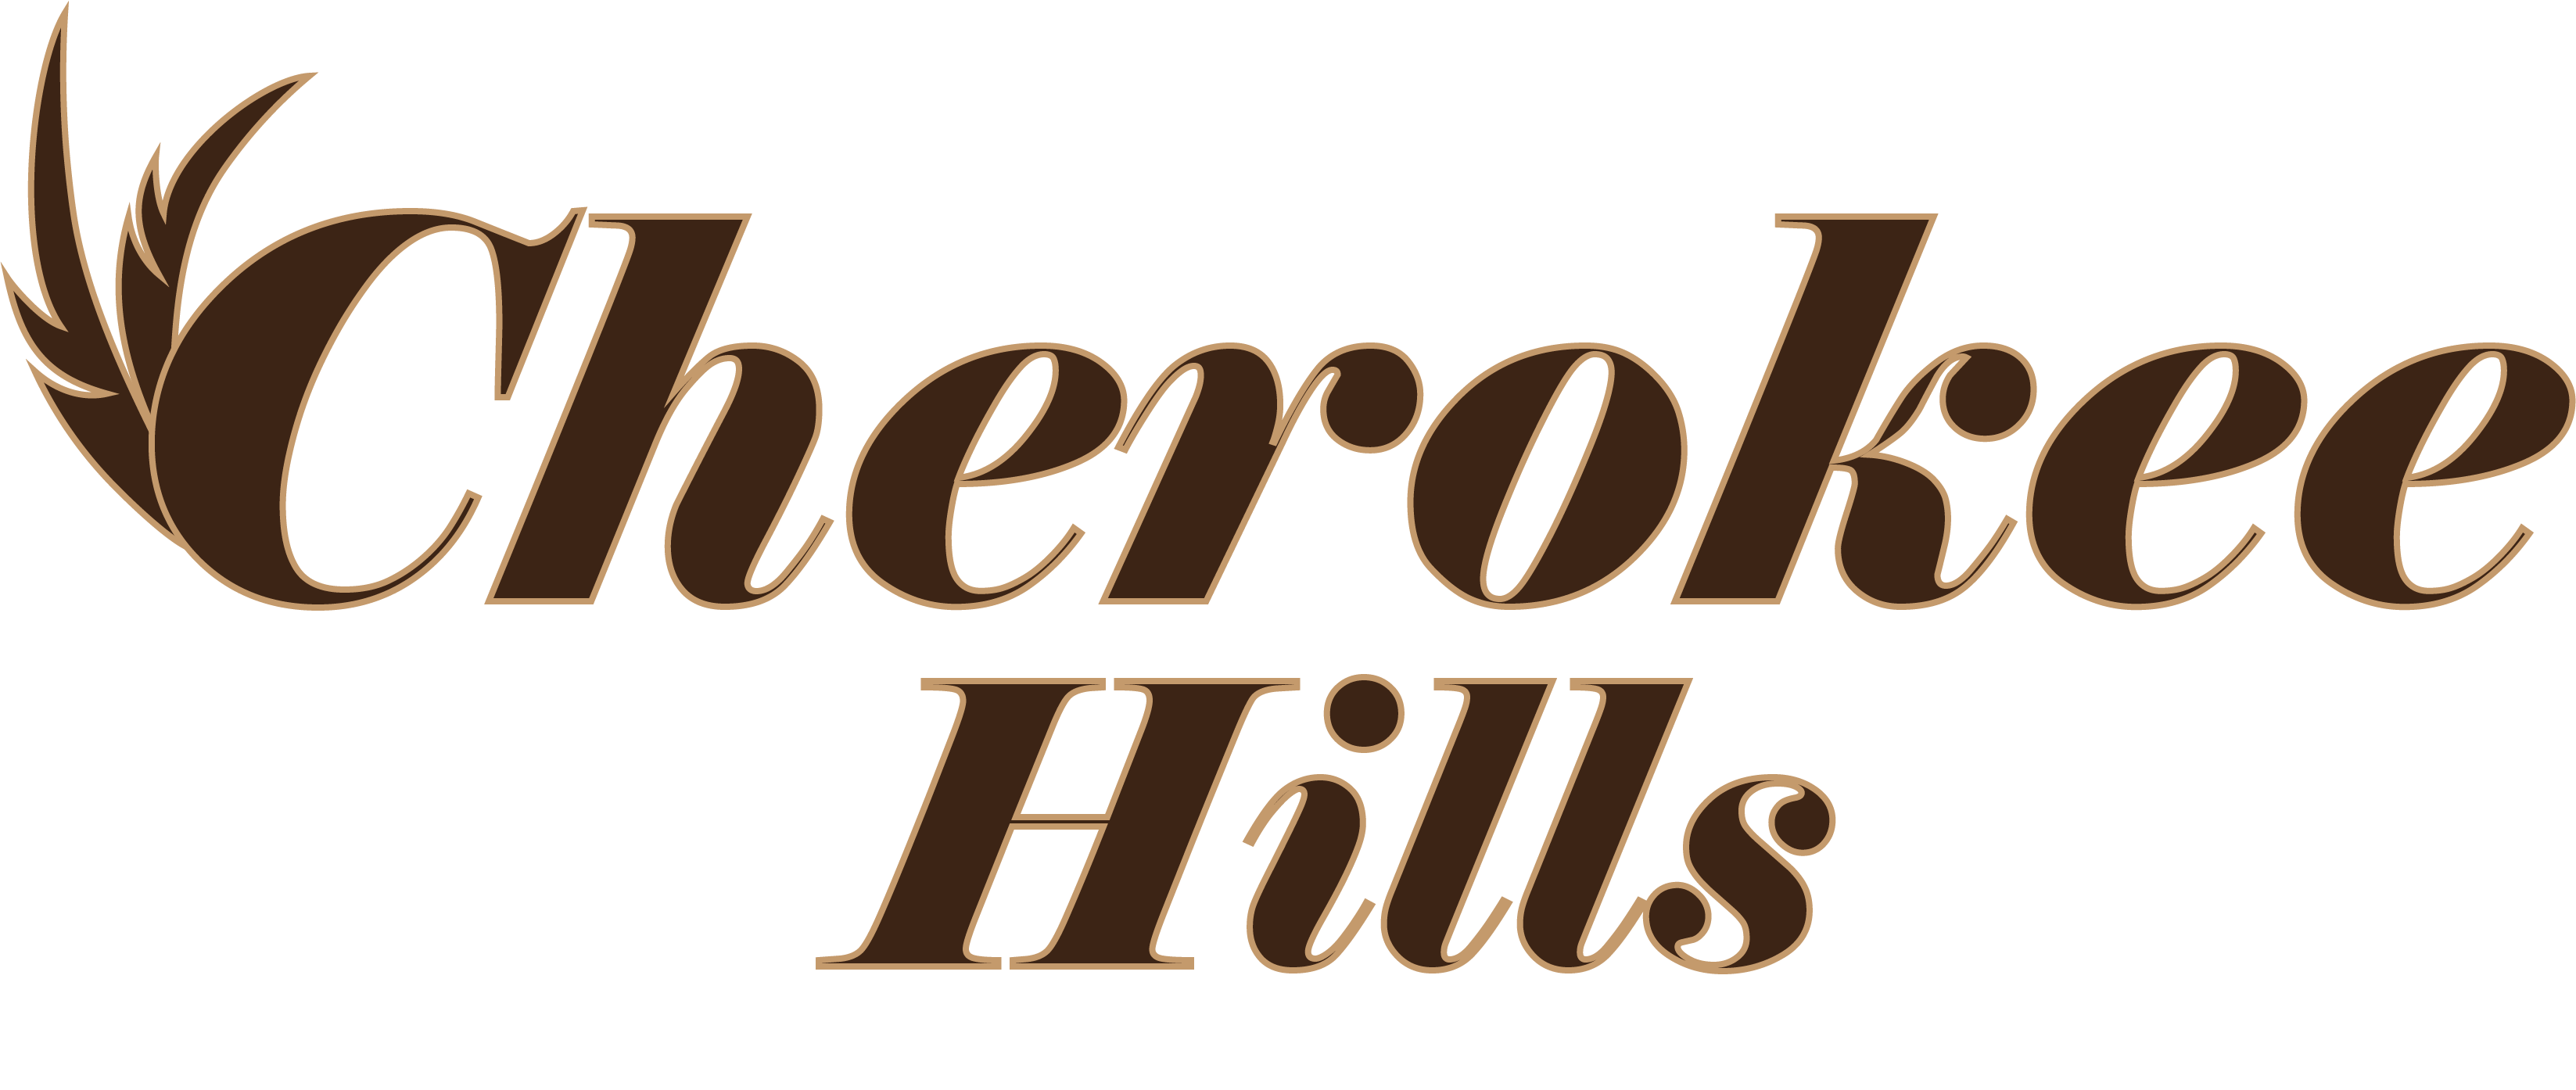 Cherokee Hills Logo